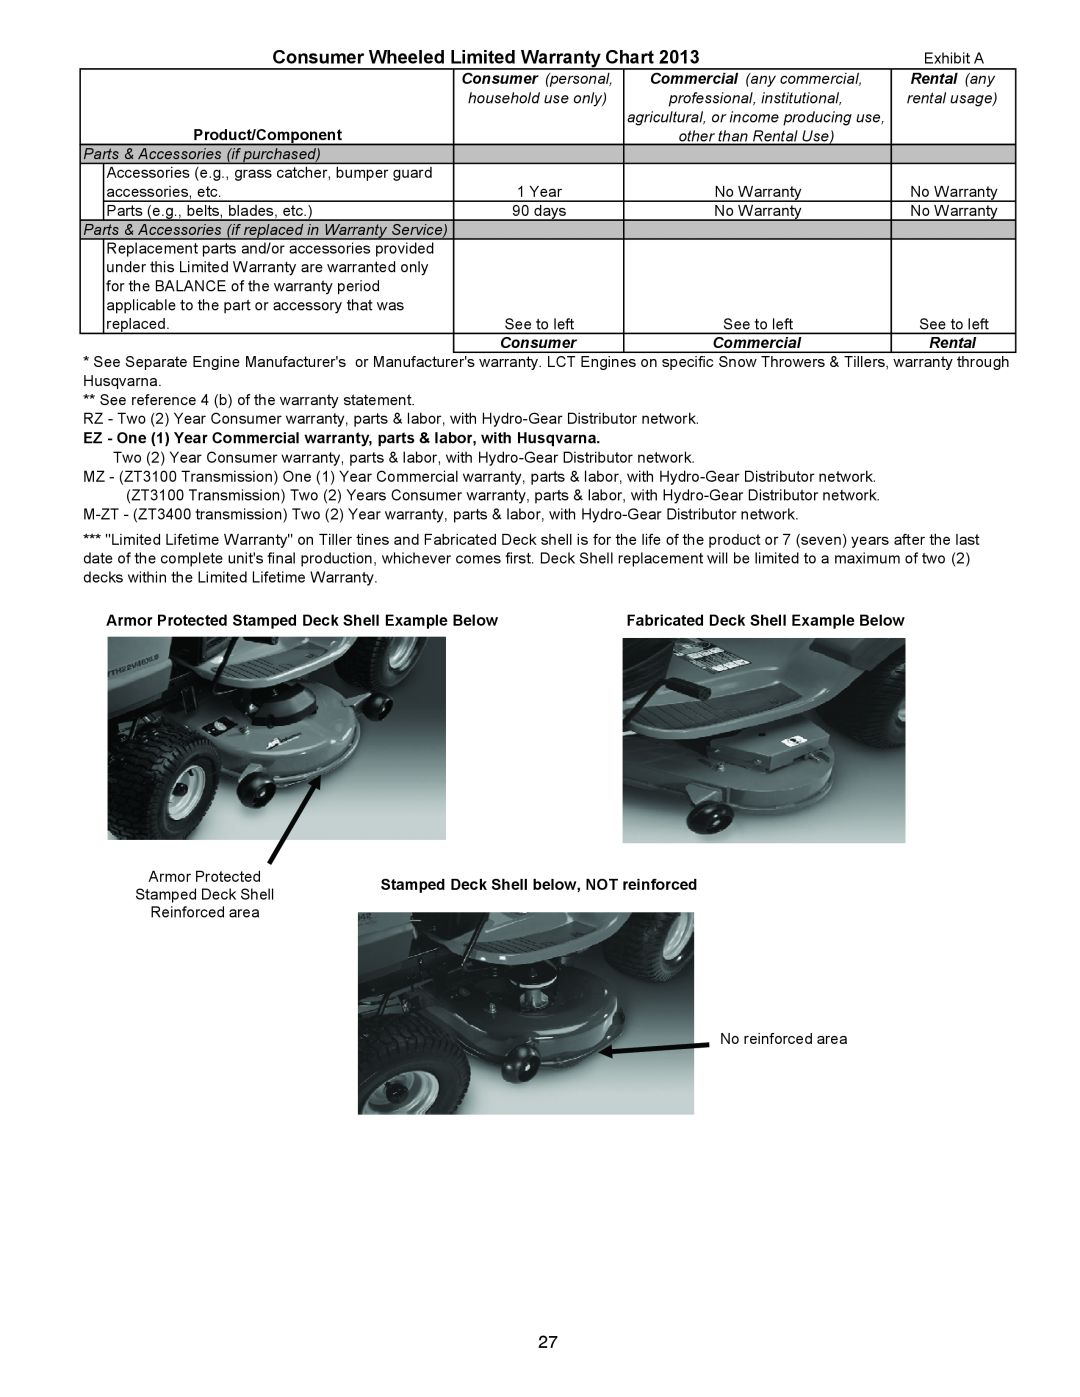 Husqvarna 12530HV warranty Consumer Wheeled Limited Warranty Chart, Product/Component 